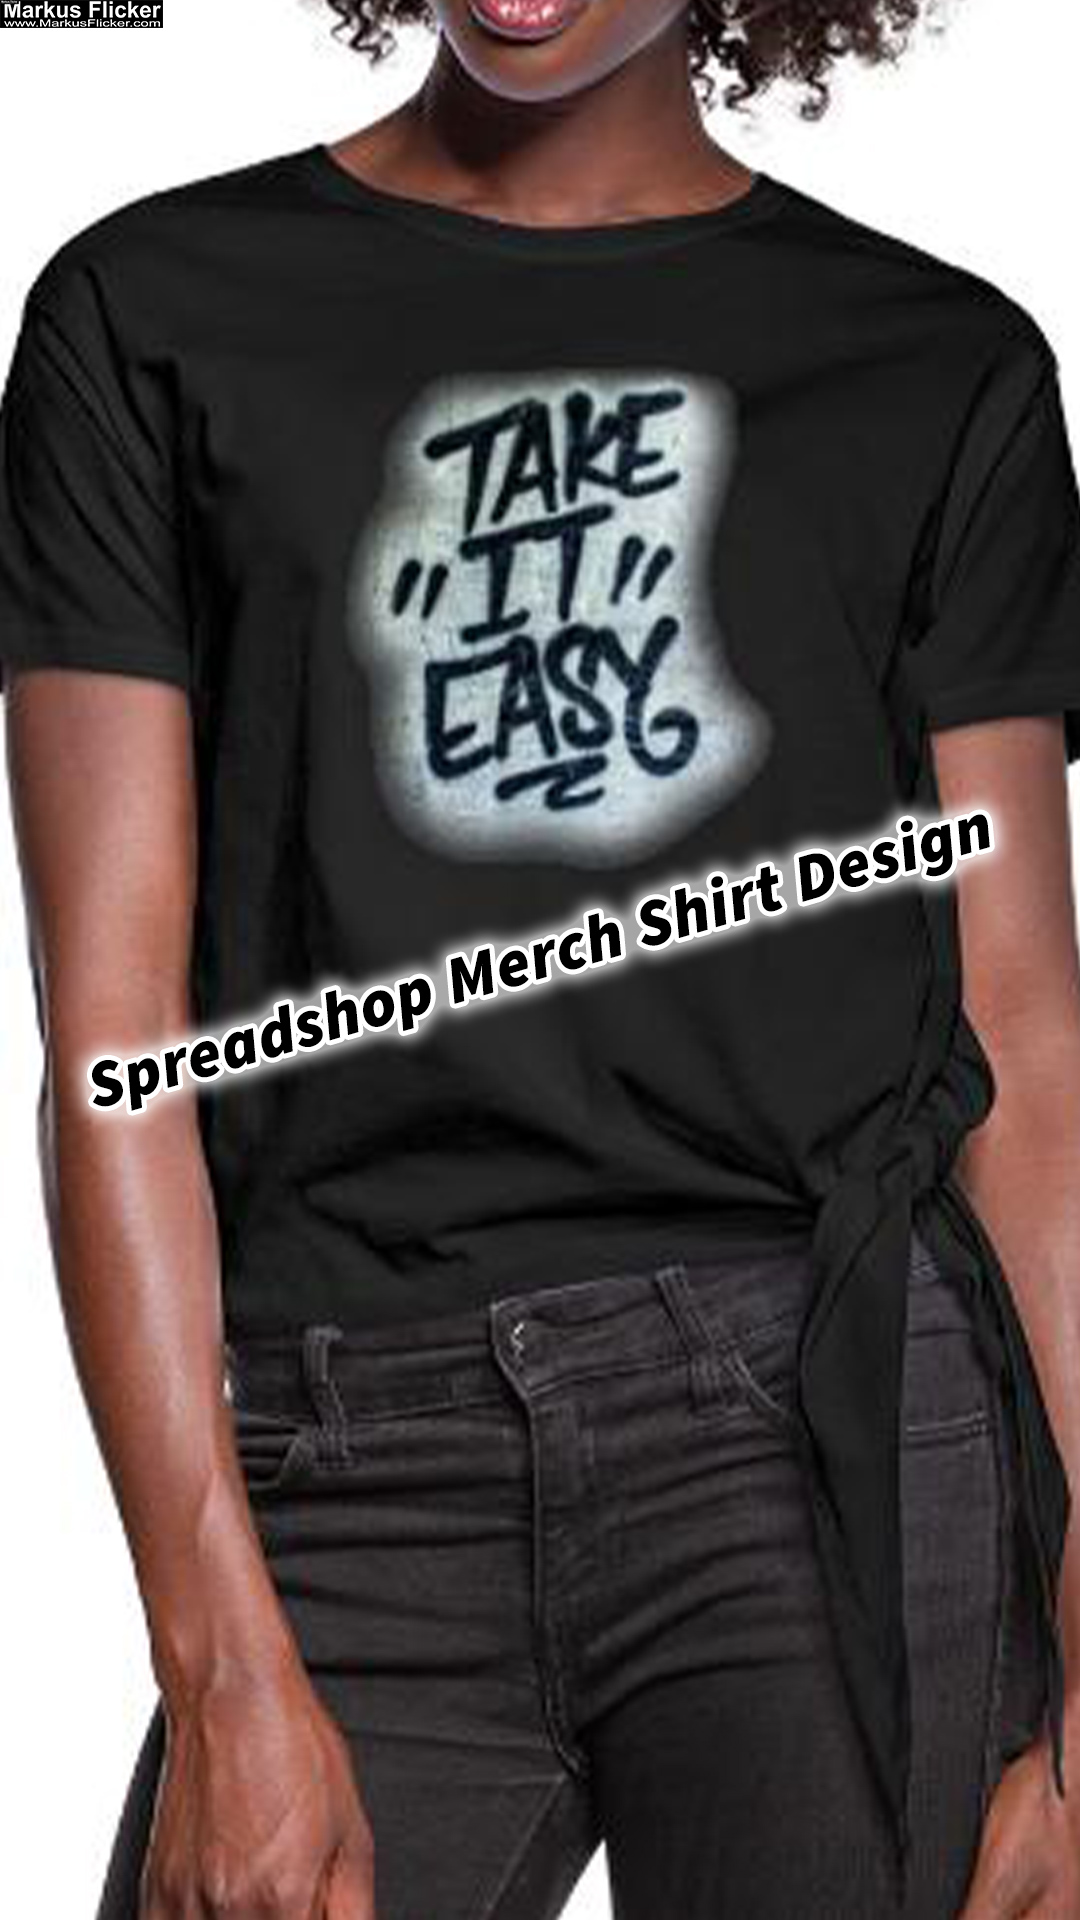 Spreadshop Merchandising Design shop